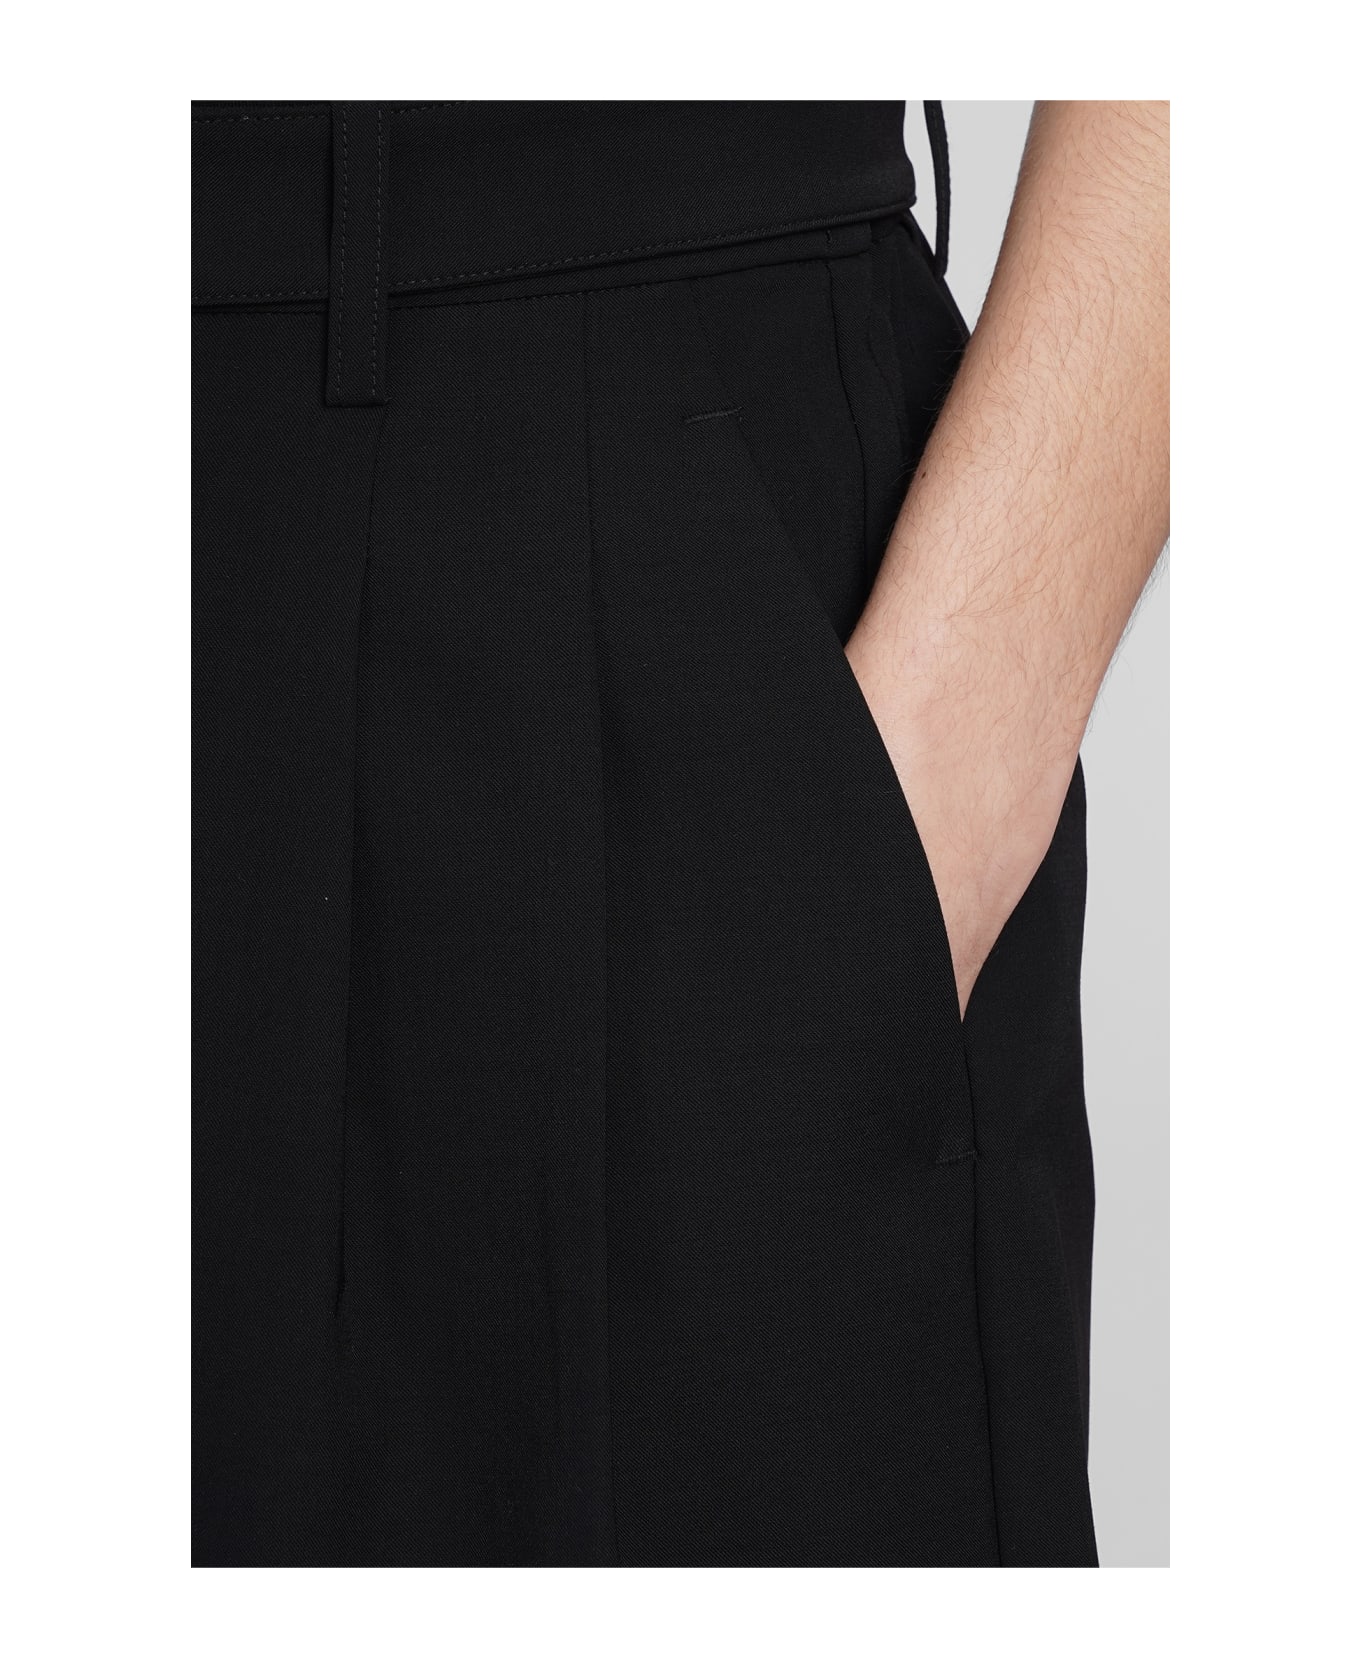 Attachment Shorts In Black Polyester - black ショートパンツ